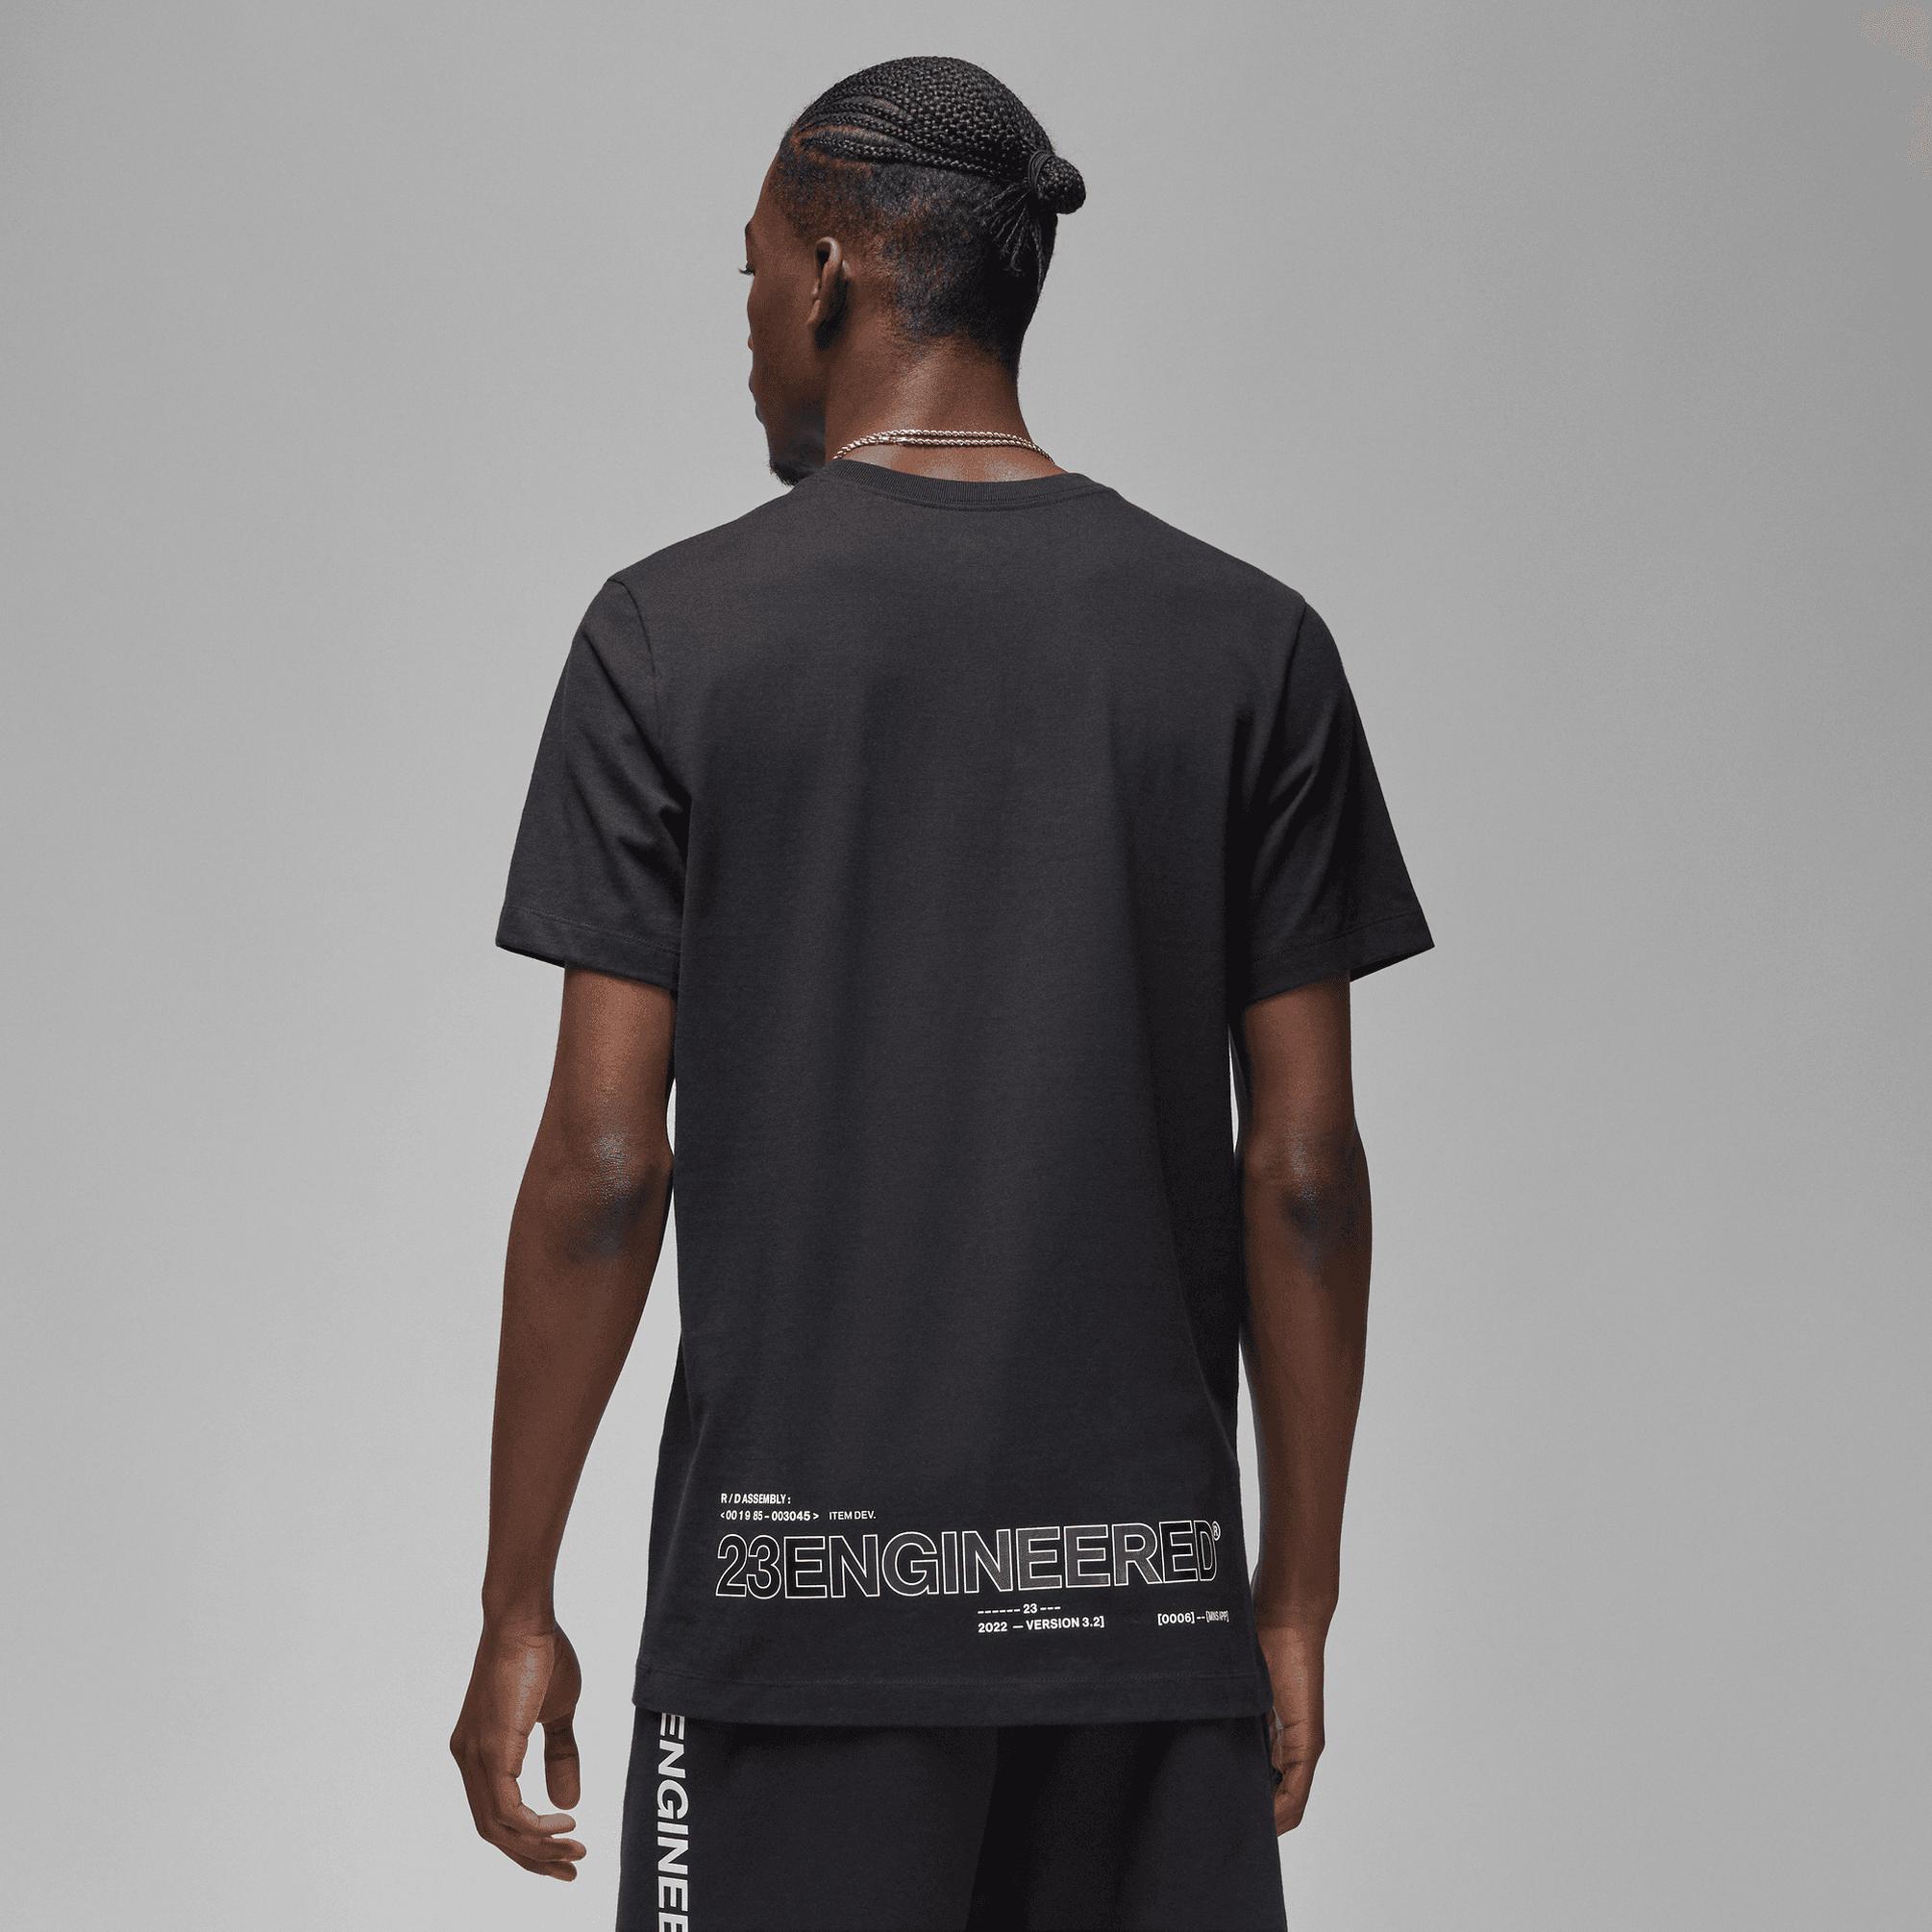  Jordan 23 Engineered Erkek Siyah T-Shirt